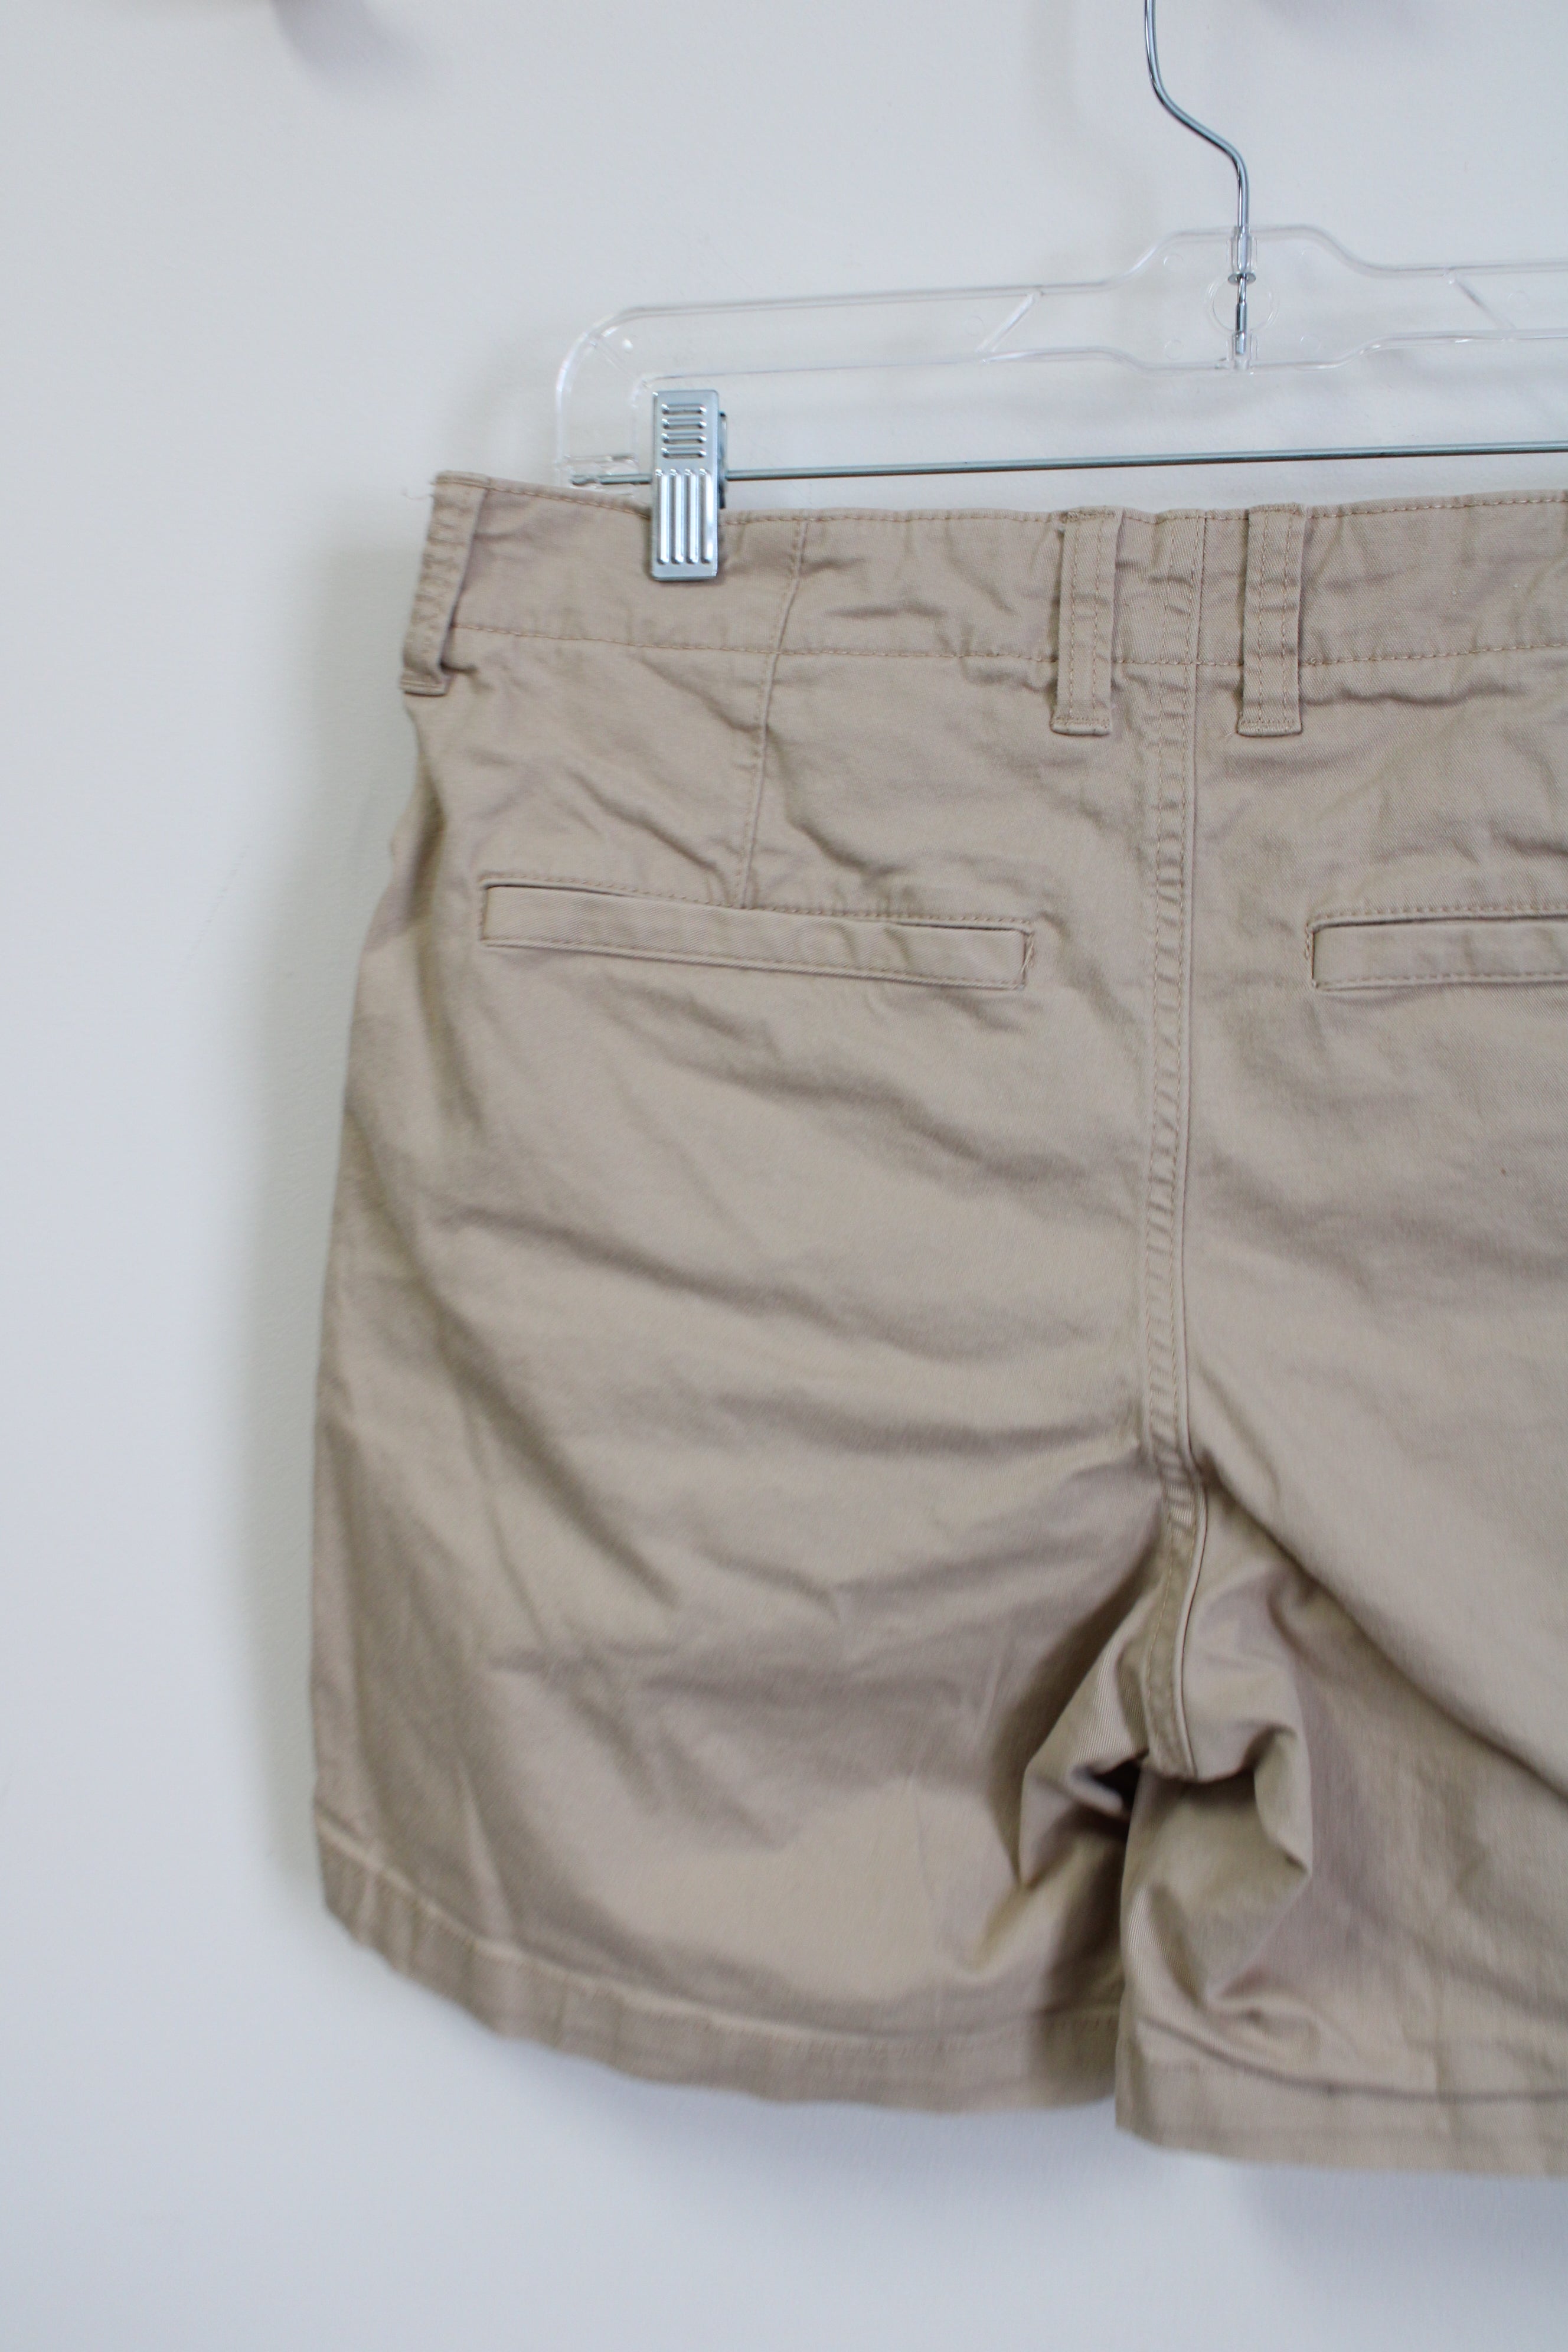 H&M Regular Fit Tan Chino Shorts | 29